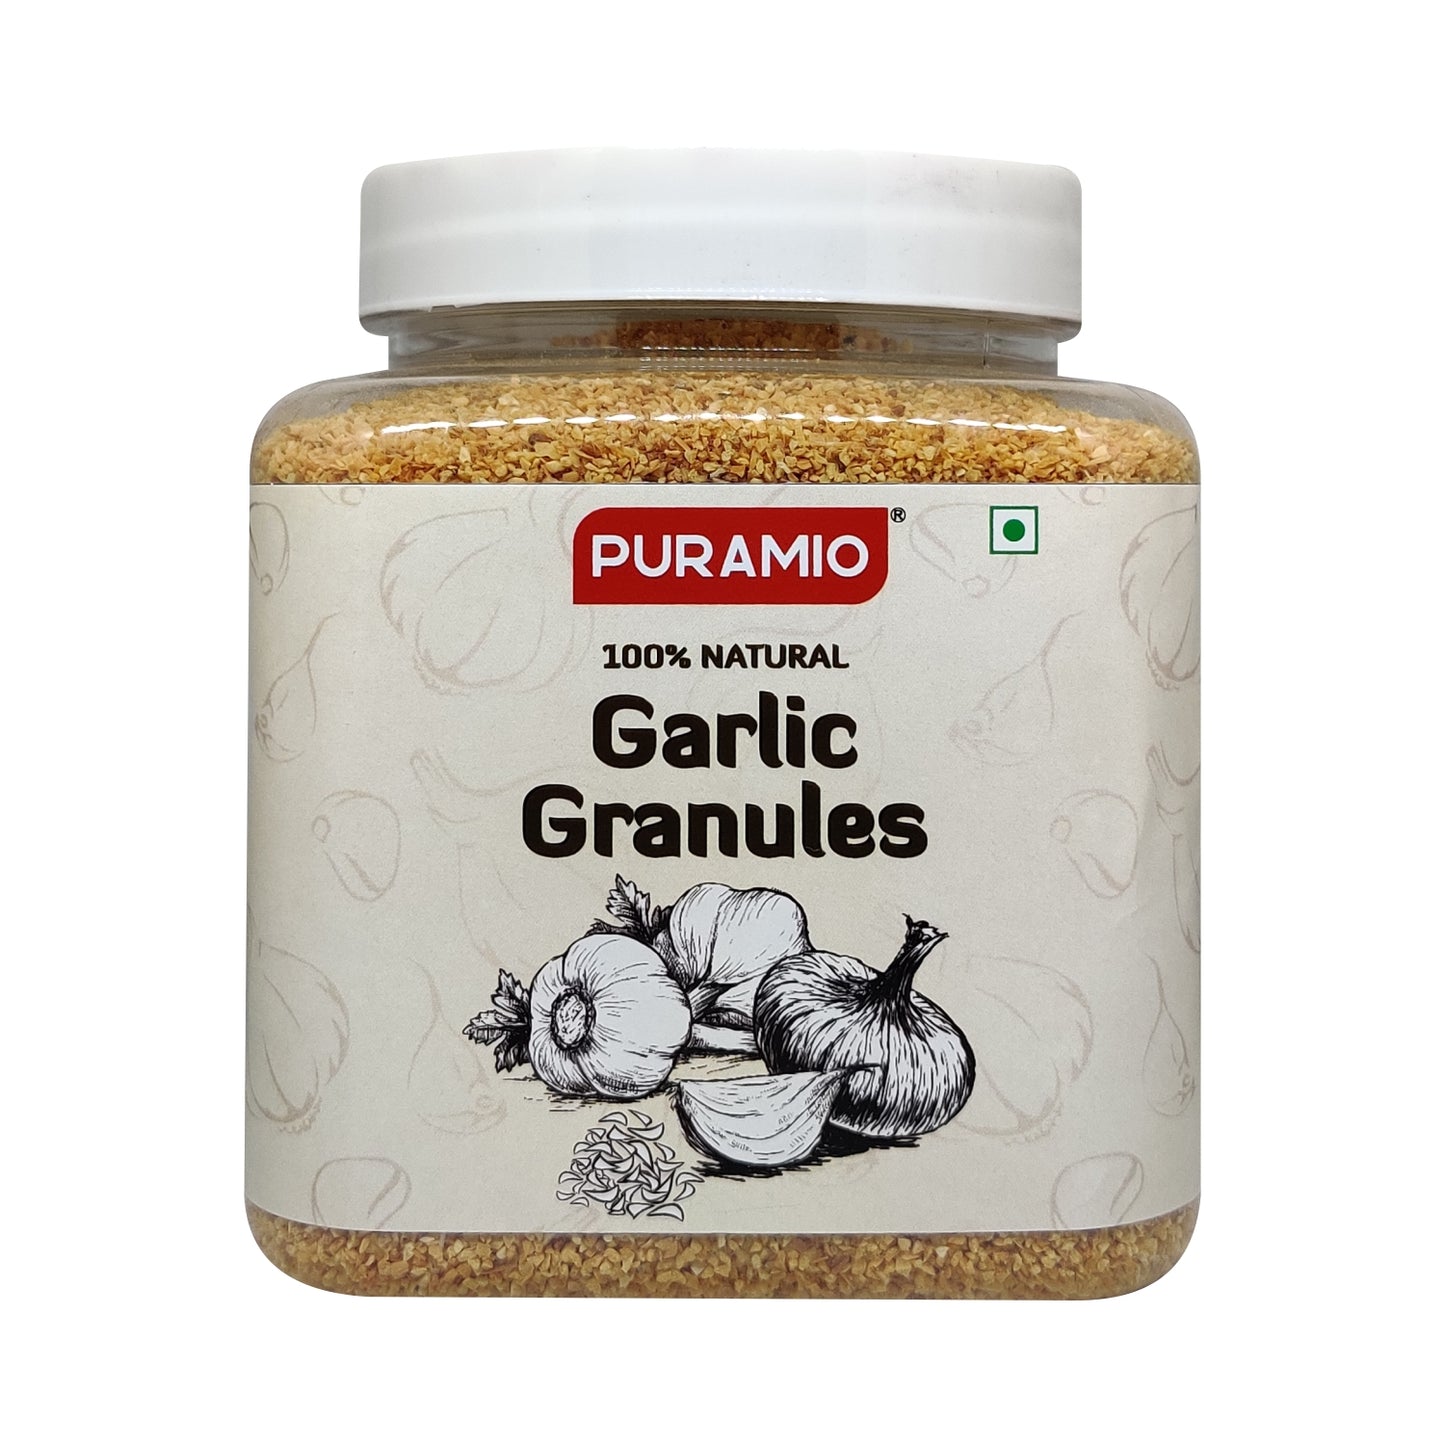 Puramio Garlic Granules [100% Natural]